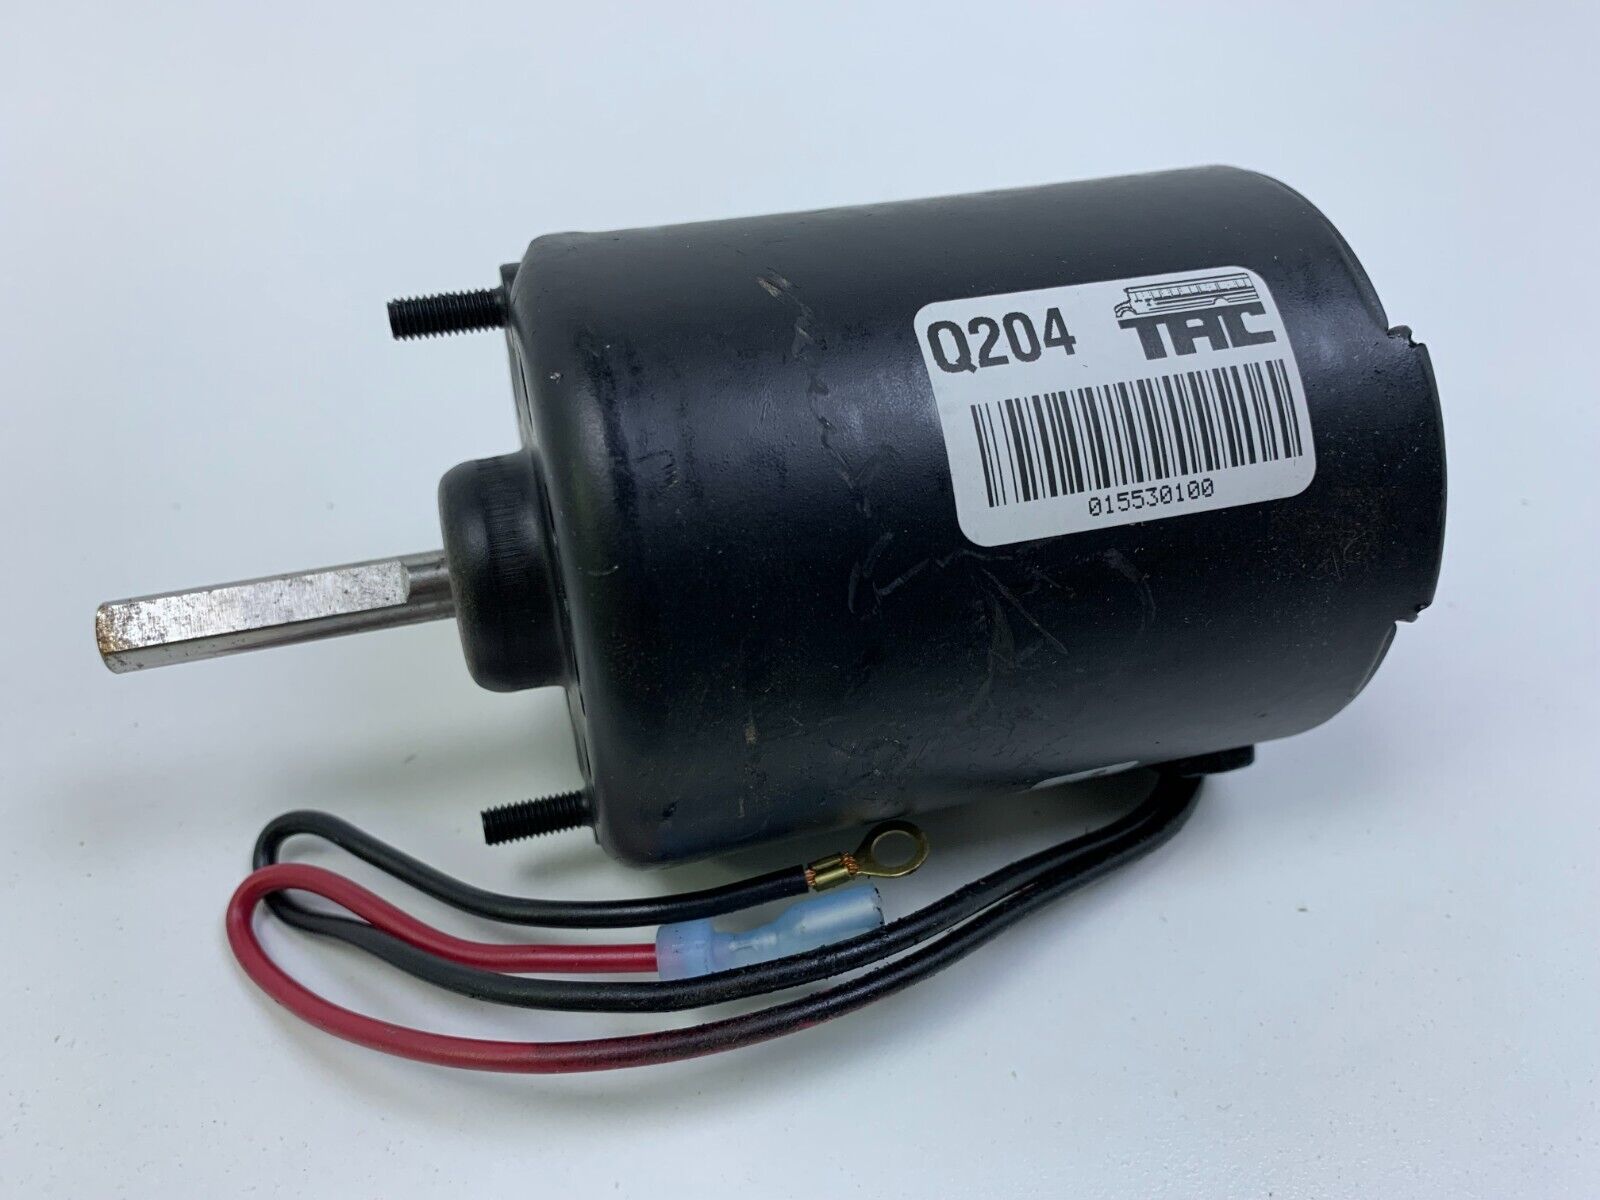 TAC Q204 Heater Blower Motor 015530100 Permanent Magnet for Wayne / Carpenter